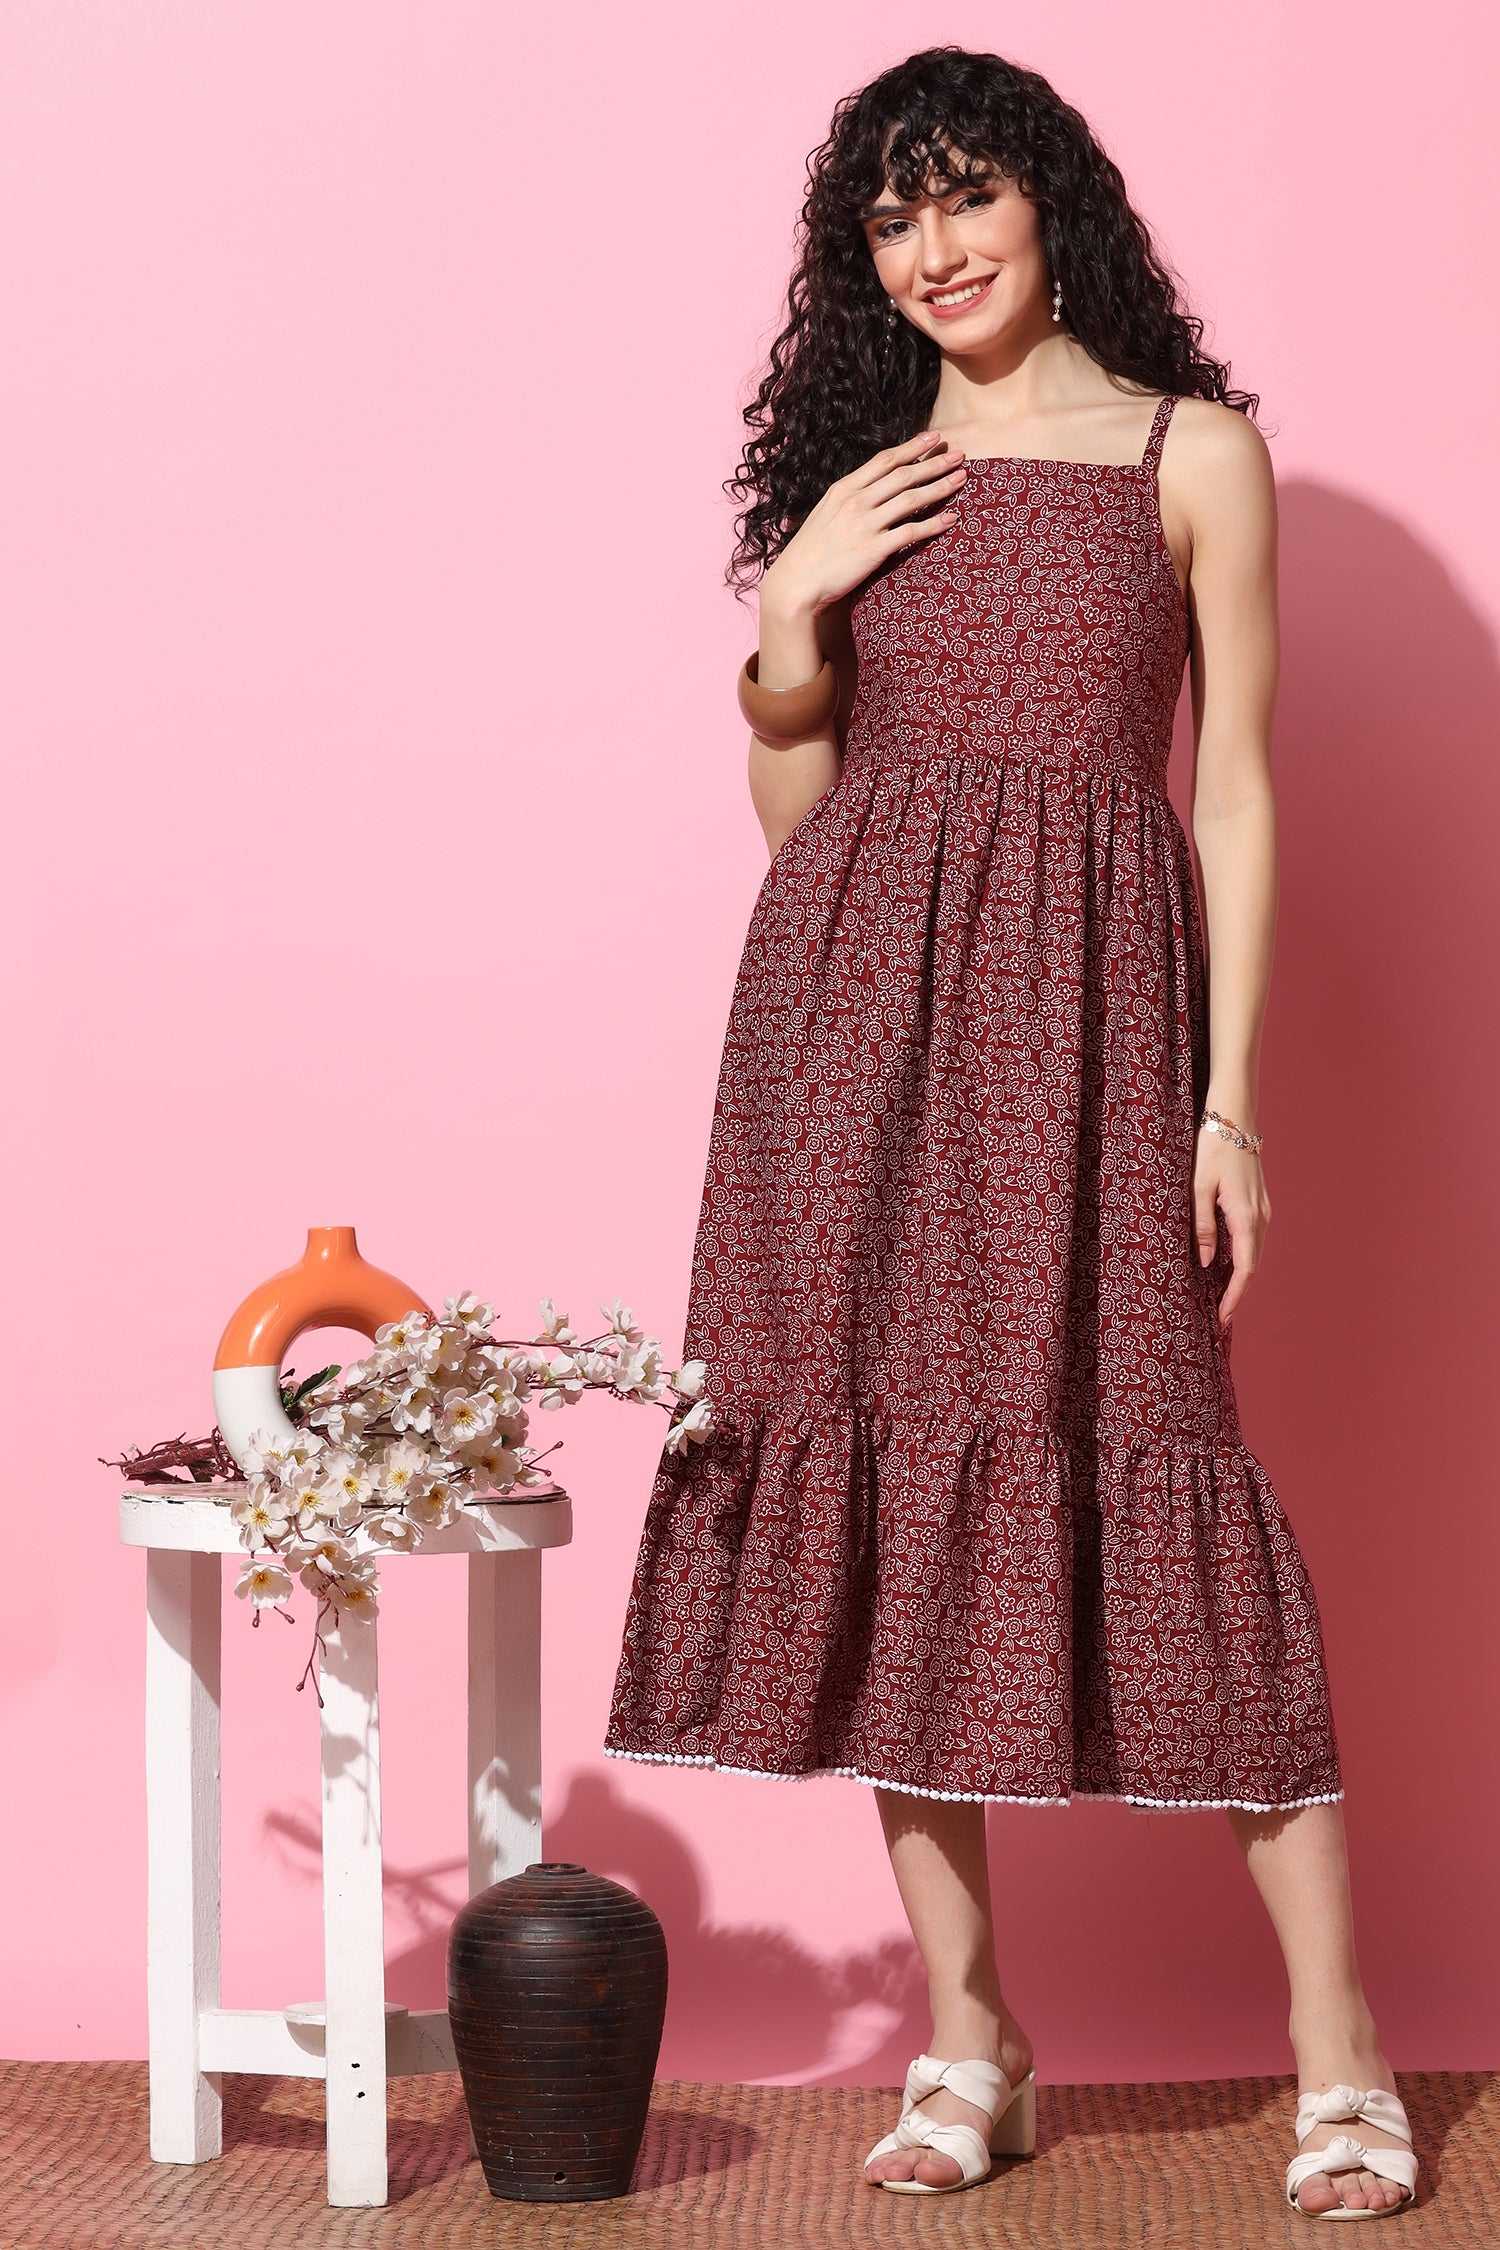 Ivory Midi Dress - Floral Print Dress - Sleeveless Dress - Lulus